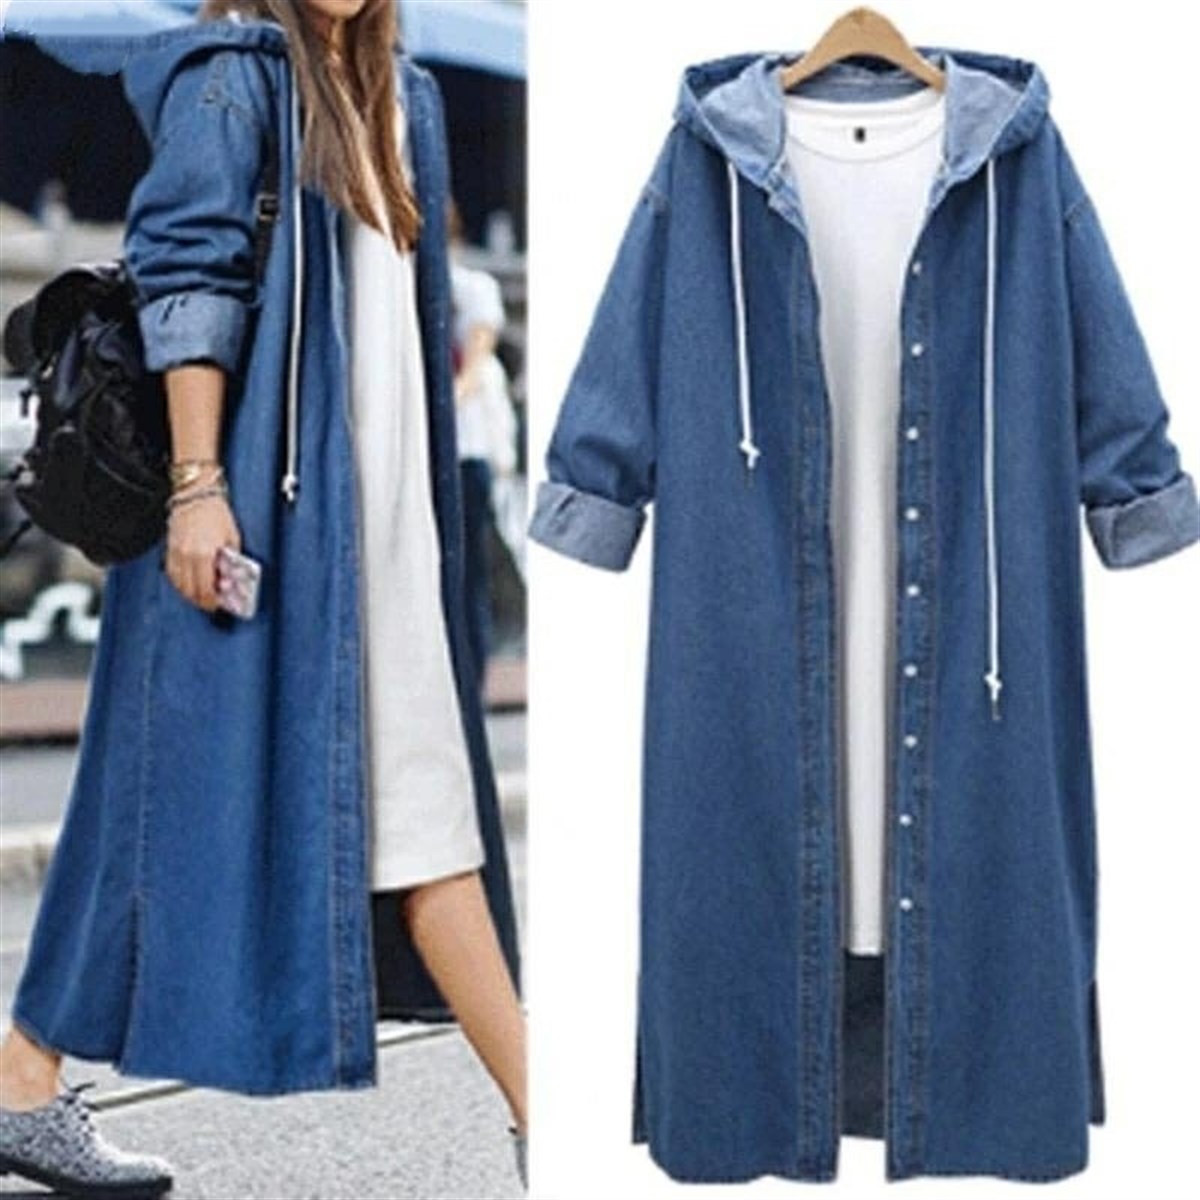 Kadın Mavi Kapşonlu Düğmeli Kot Gömlek Elbise(40 (S) - 42 (M) - 44 (L) - 46  (XL) - 48 (2XL) - 50 (3XL)) - Viyamo